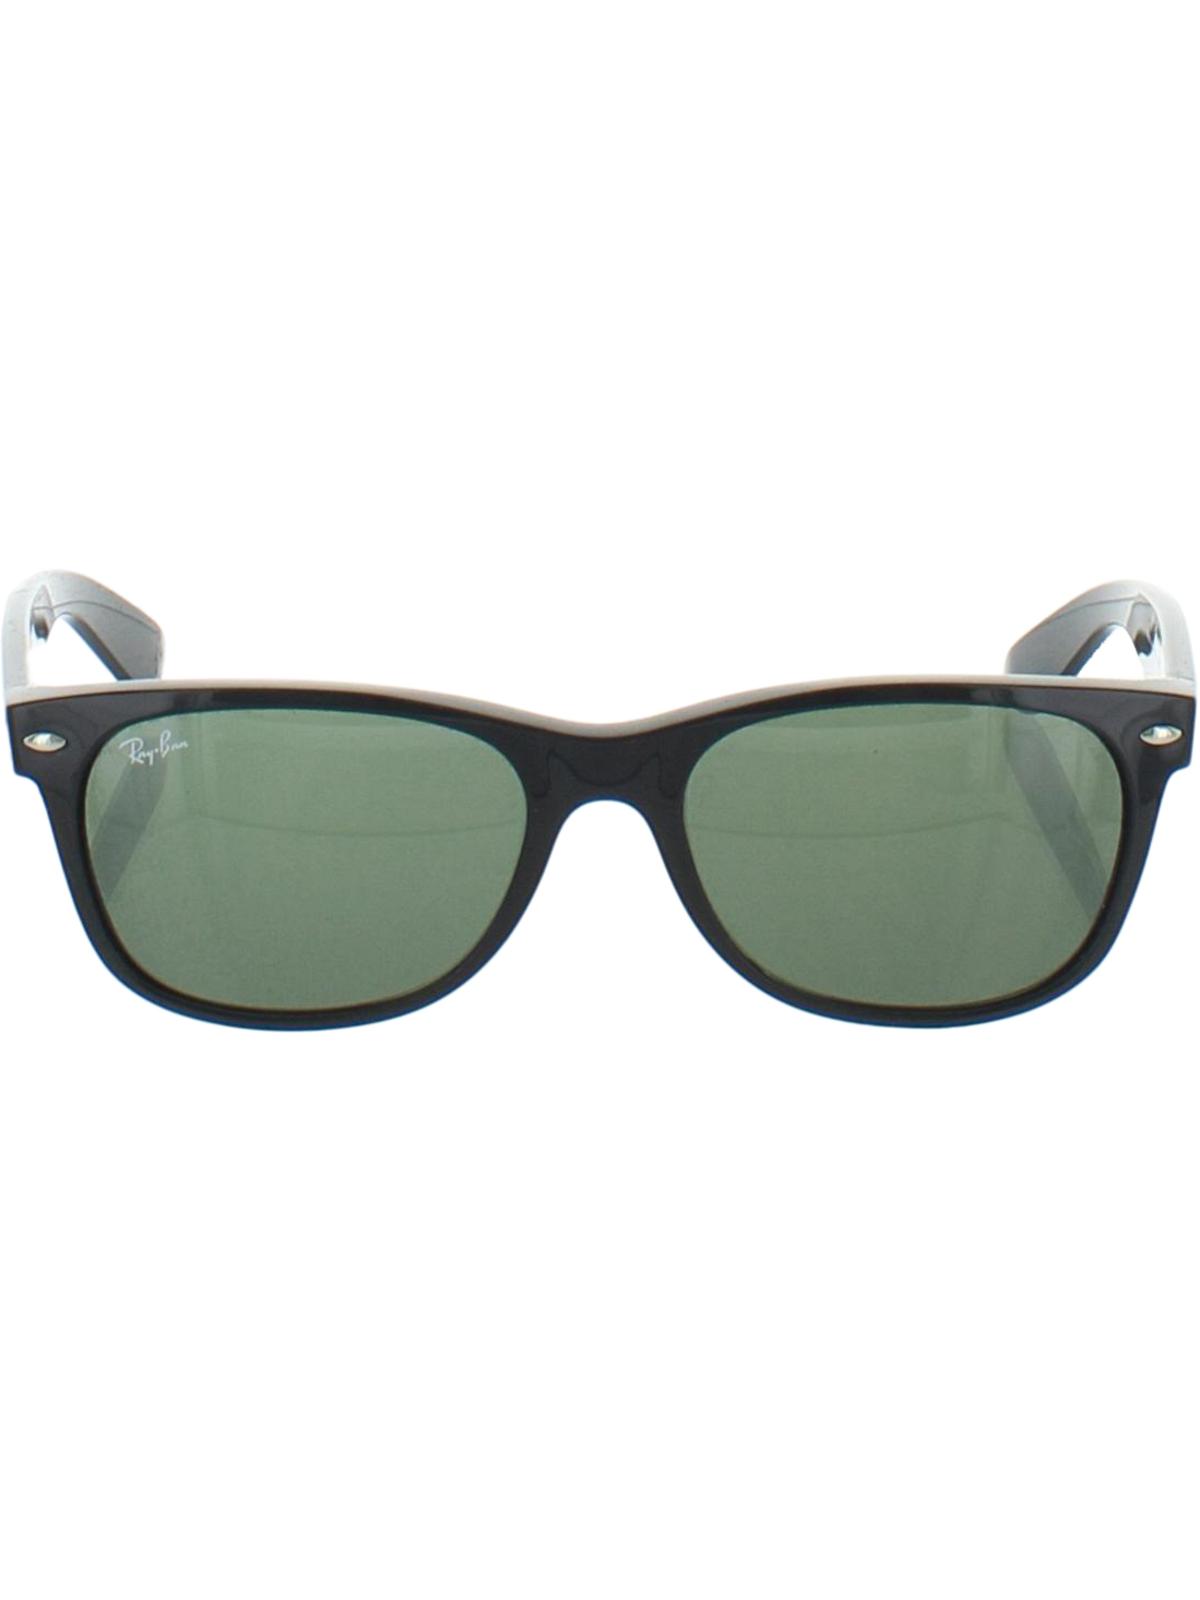 Ray Ban New Wayfarer Classic Green Classic G-15 Unisex Sunglasses RB2132 901L 55 - image 3 of 3